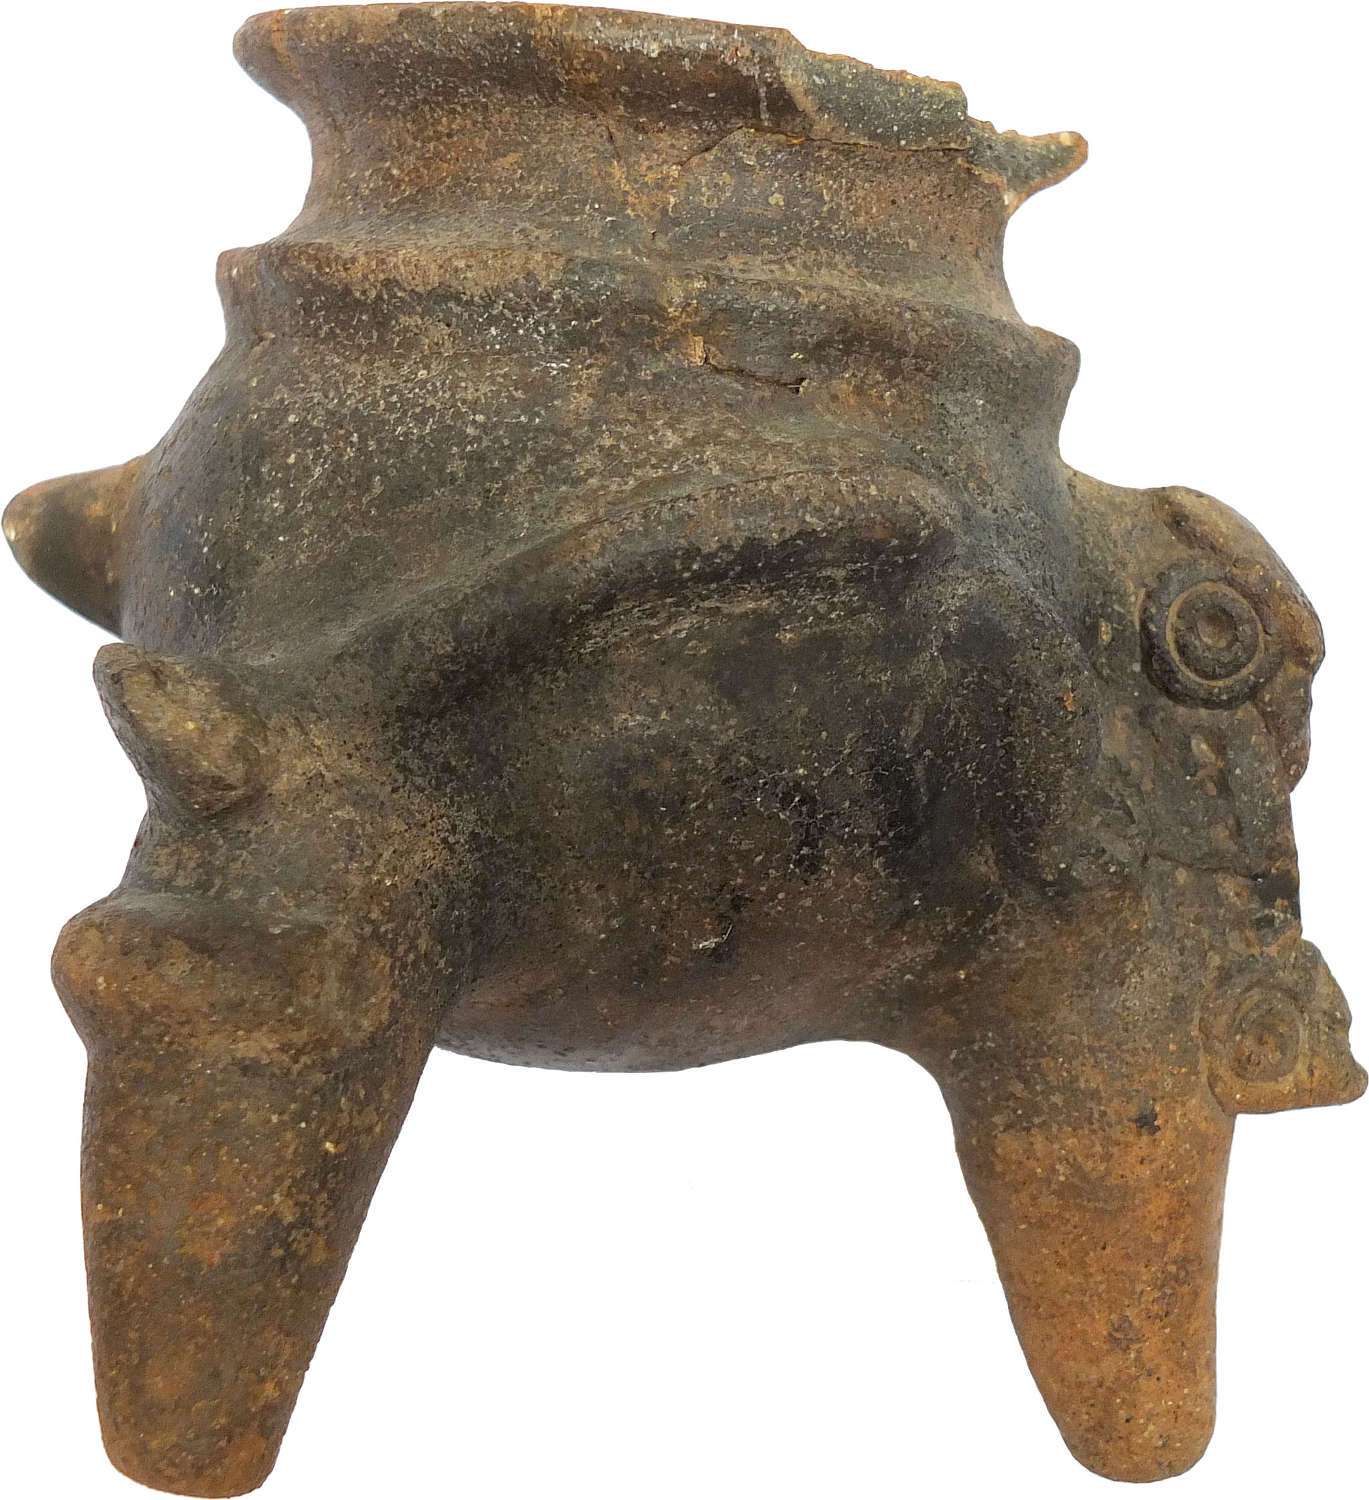 A Costa Rican zoomorphic vessel, c. 800-1500 A.D.